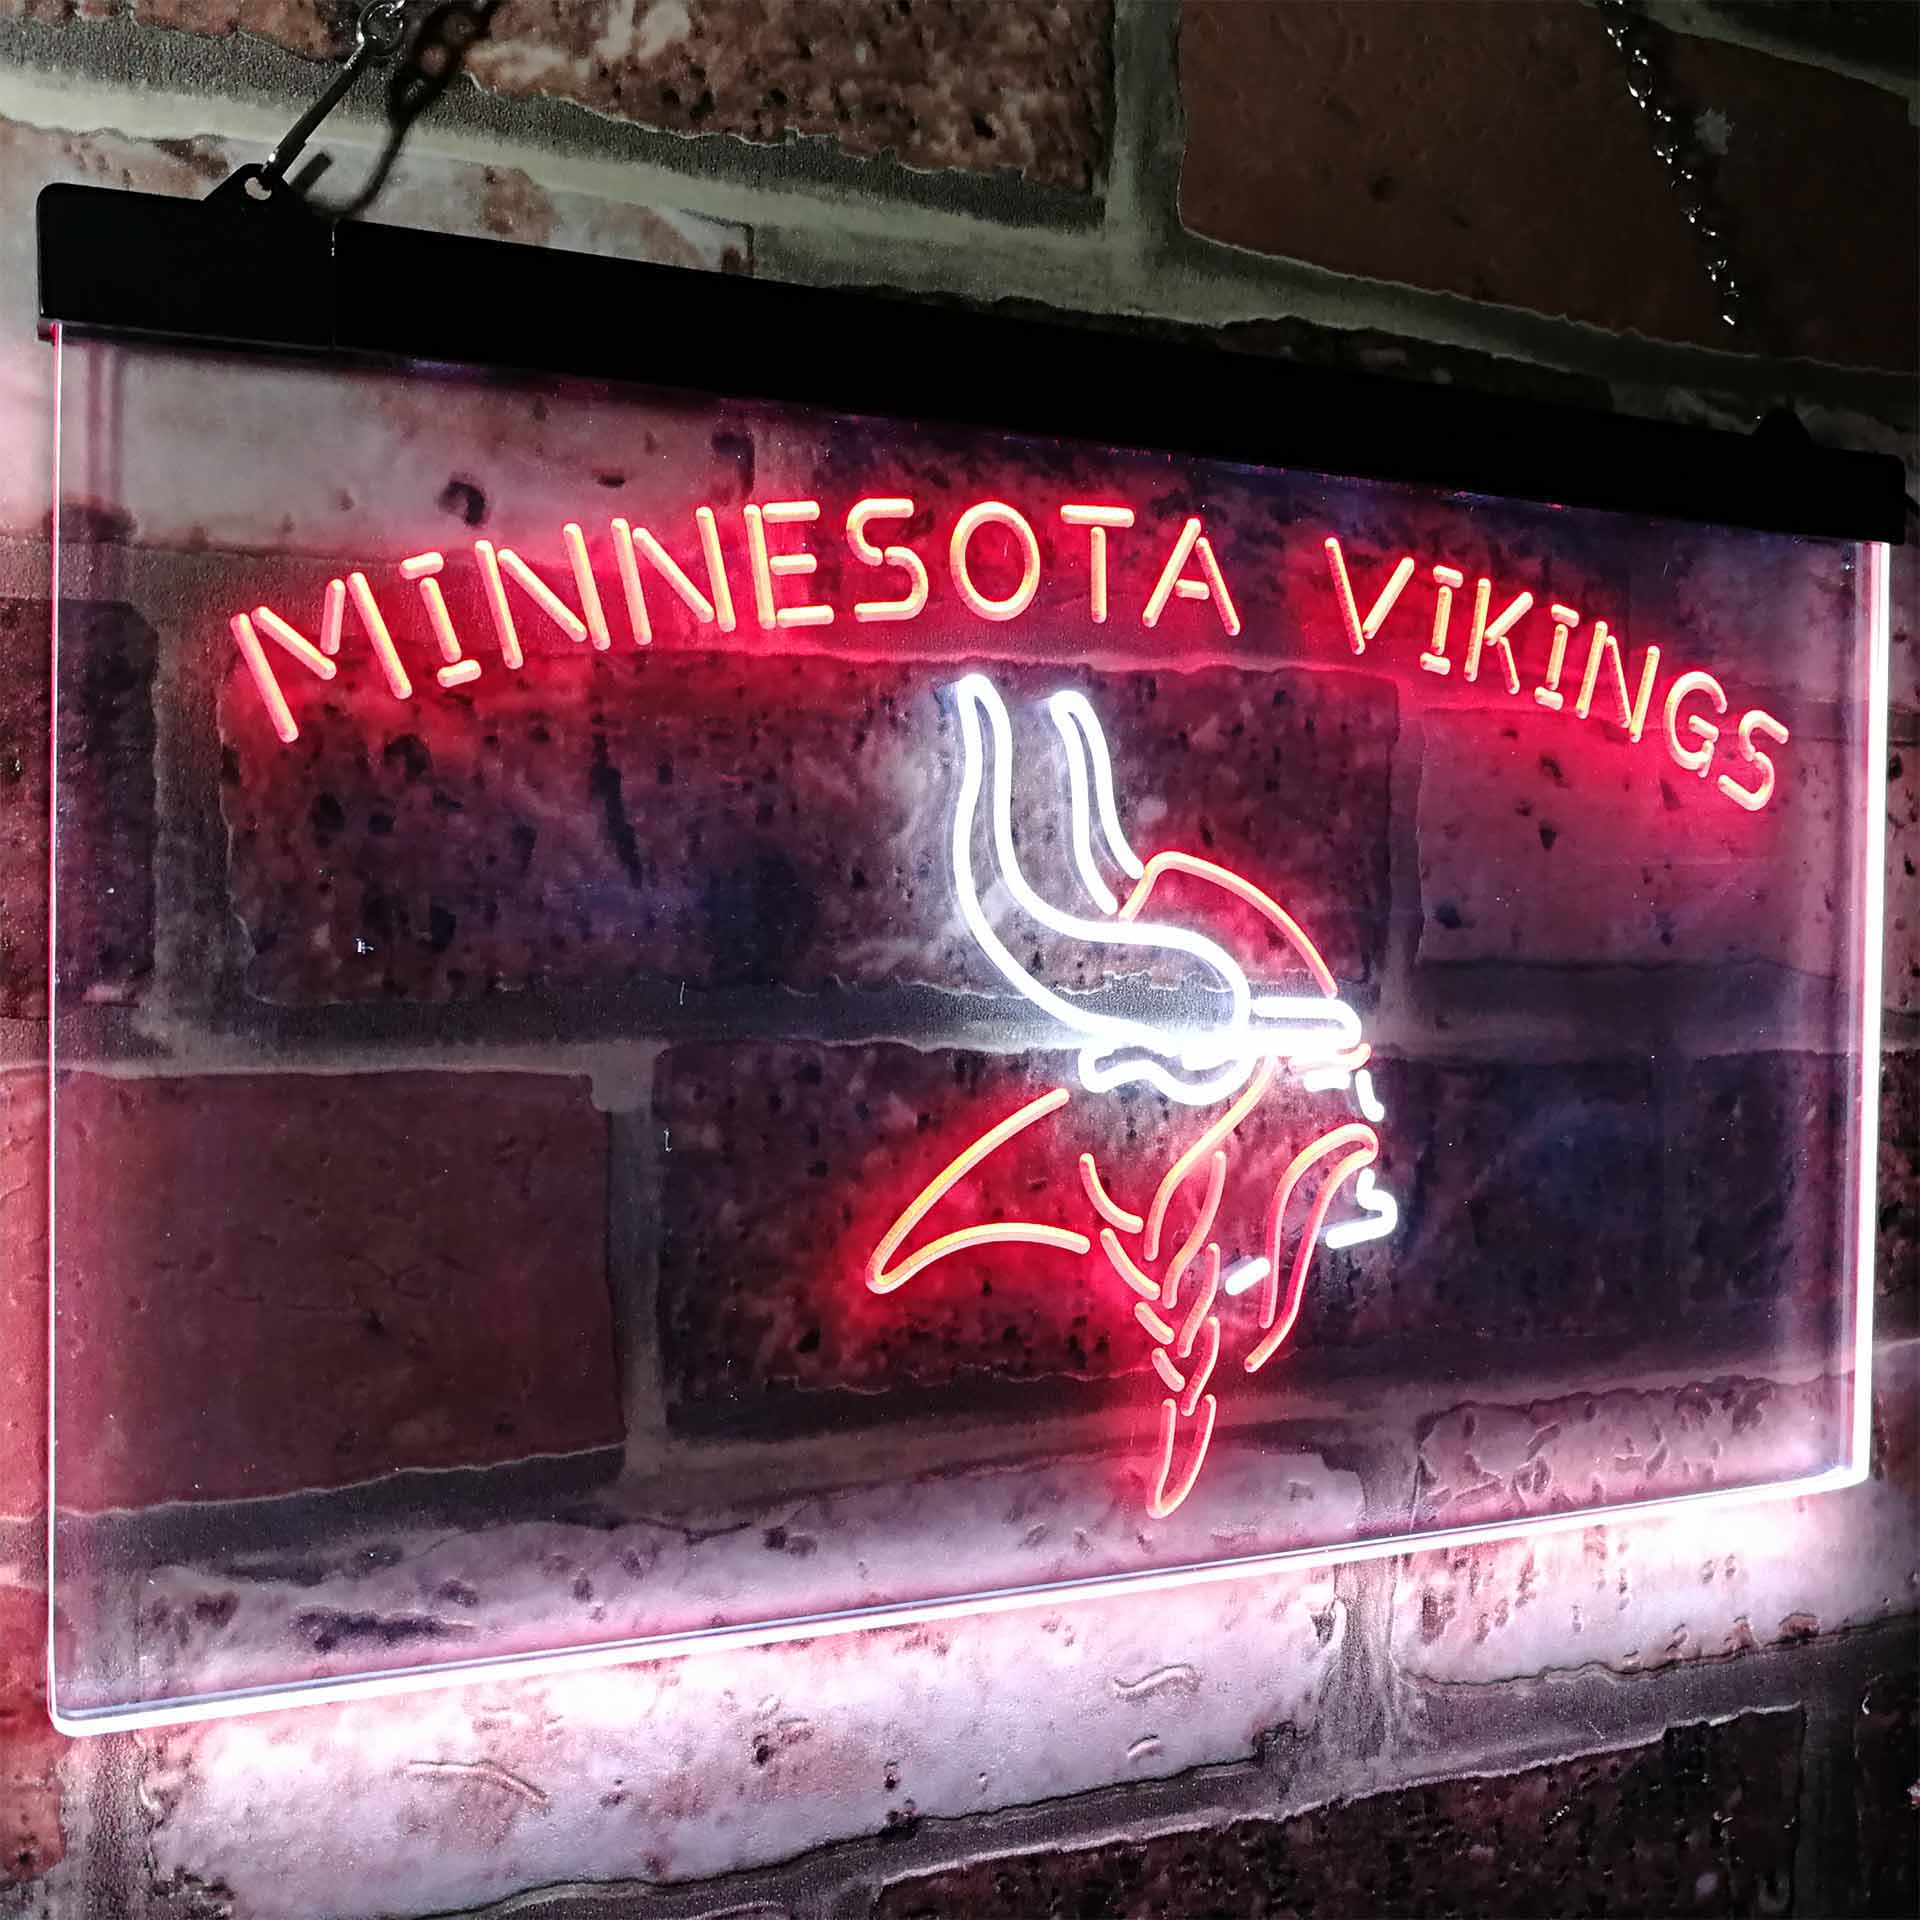 Minnesotas Viking Club Man Cave Neon Sign